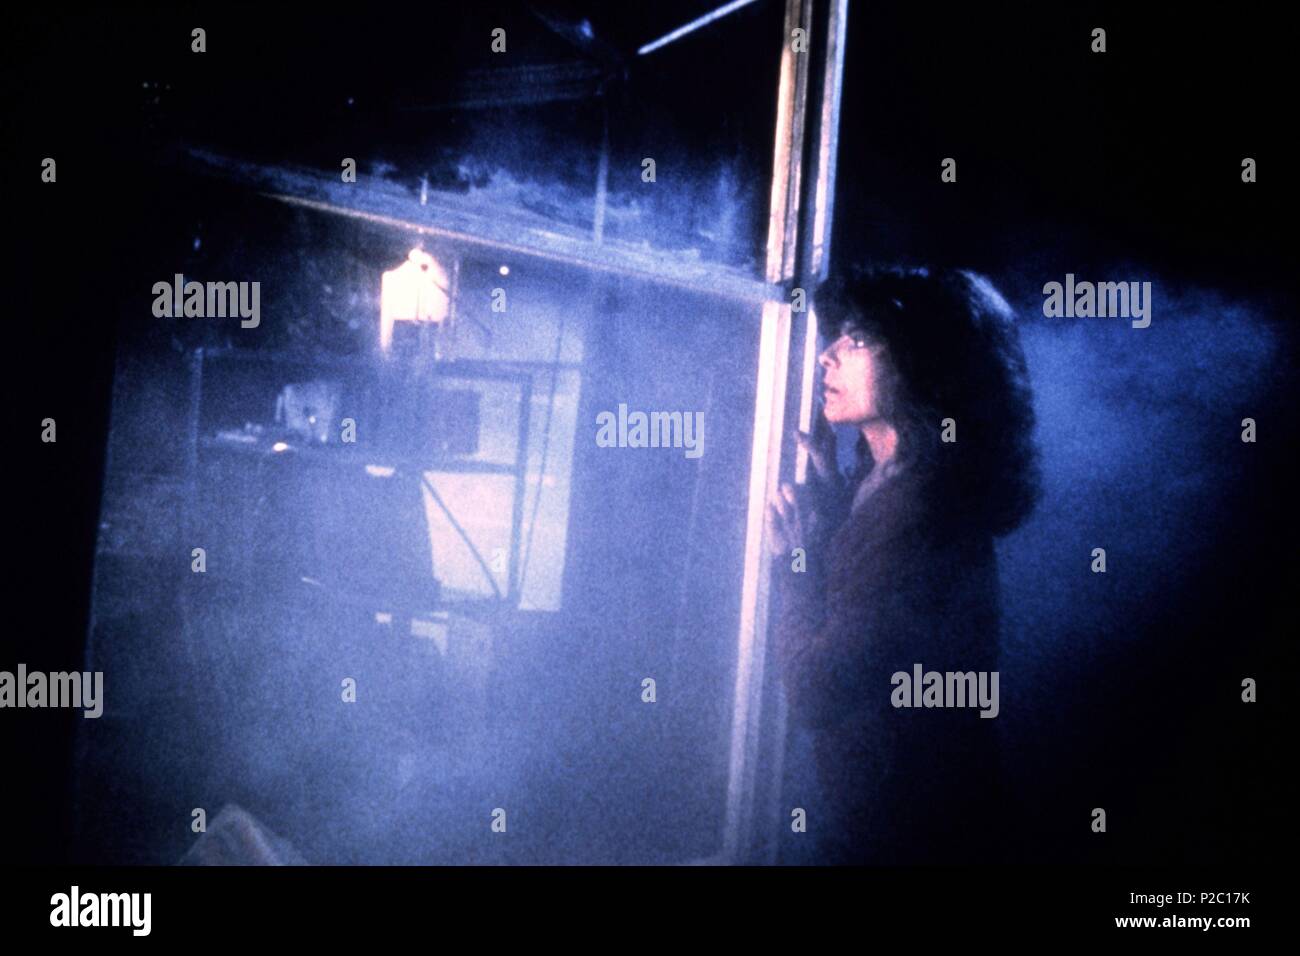 Original Film Title: THE FOG.  English Title: THE FOG.  Film Director: JOHN CARPENTER.  Year: 1980.  Stars: ADRIENNE BARBEAU. Credit: AVCO/DEBRA HILL / Album Stock Photo